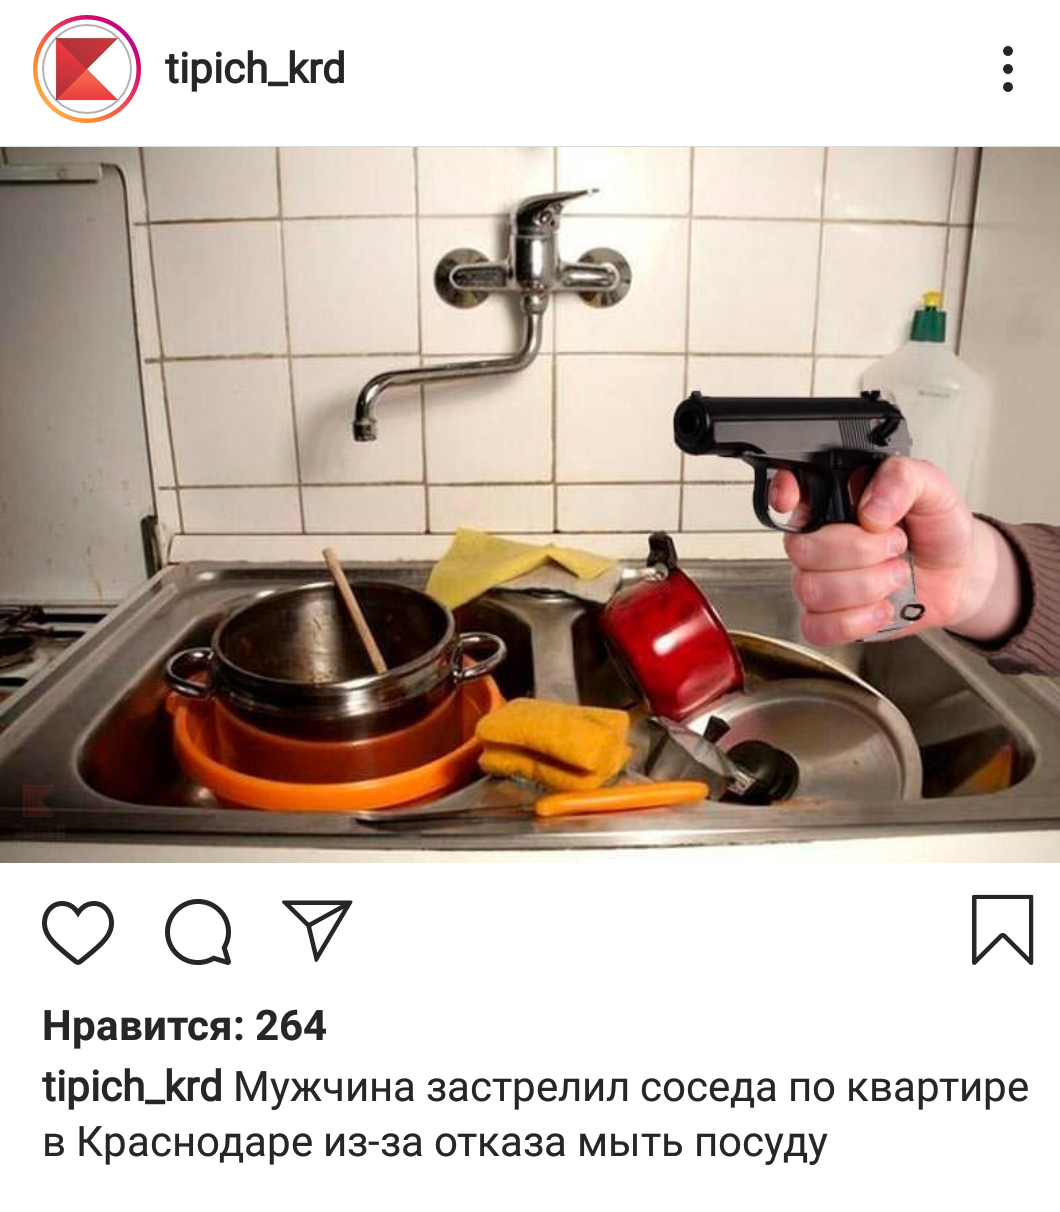 Krasnodar, what is happening to you - Crime, Screenshot, Krasnodar, Everyday life, Dirty dishes, Longpost